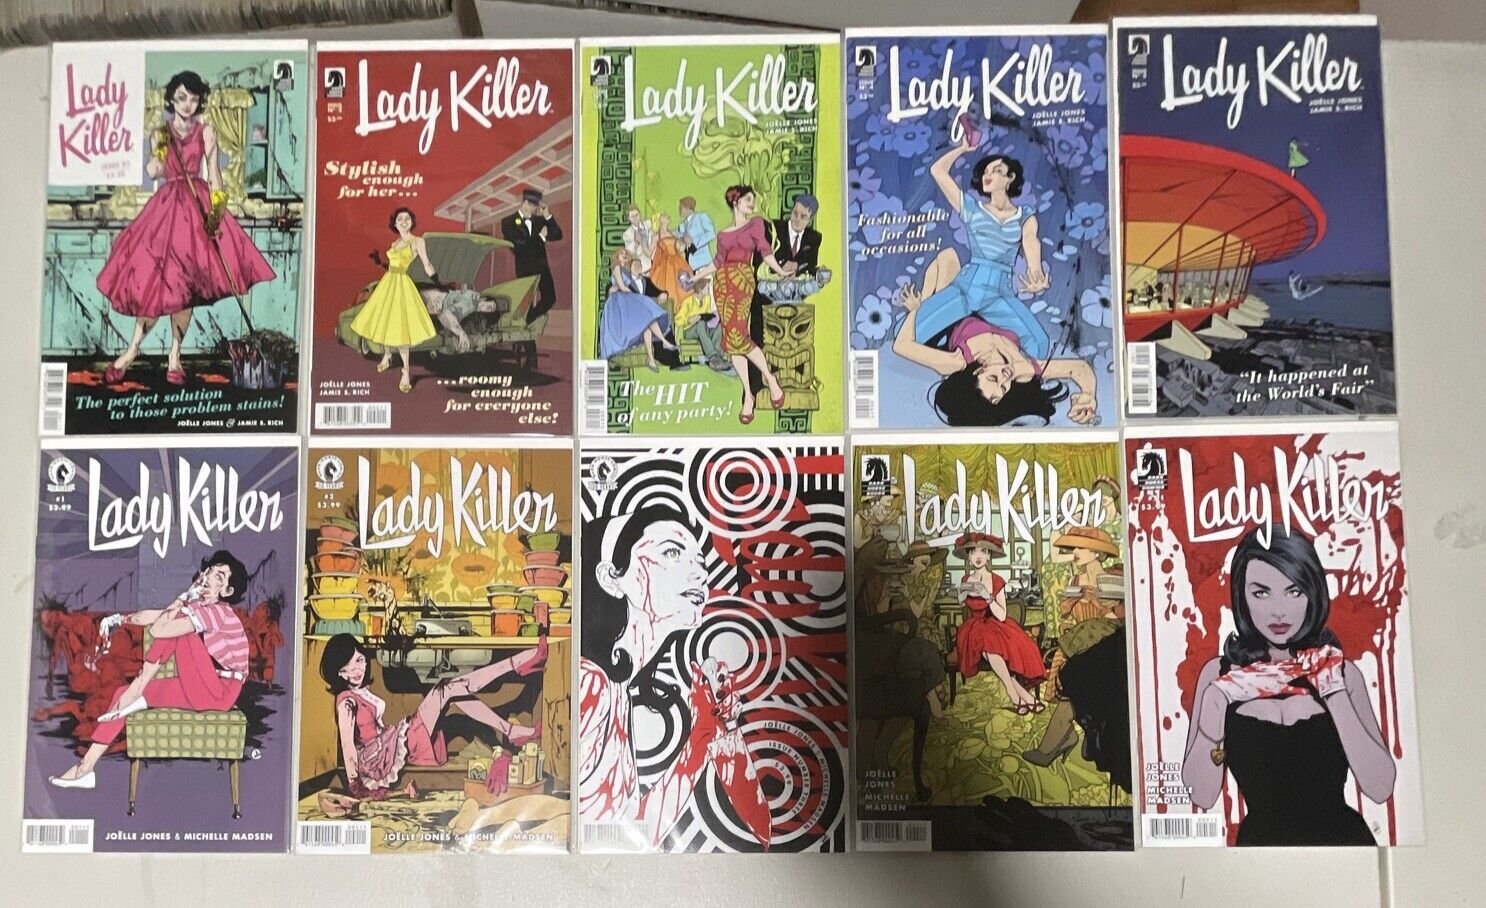 Lady Killer (Vol. 1)(Vol.2) #1 2 3 4 5 Complete Sets 1-5  Dark Horse Lot of 10